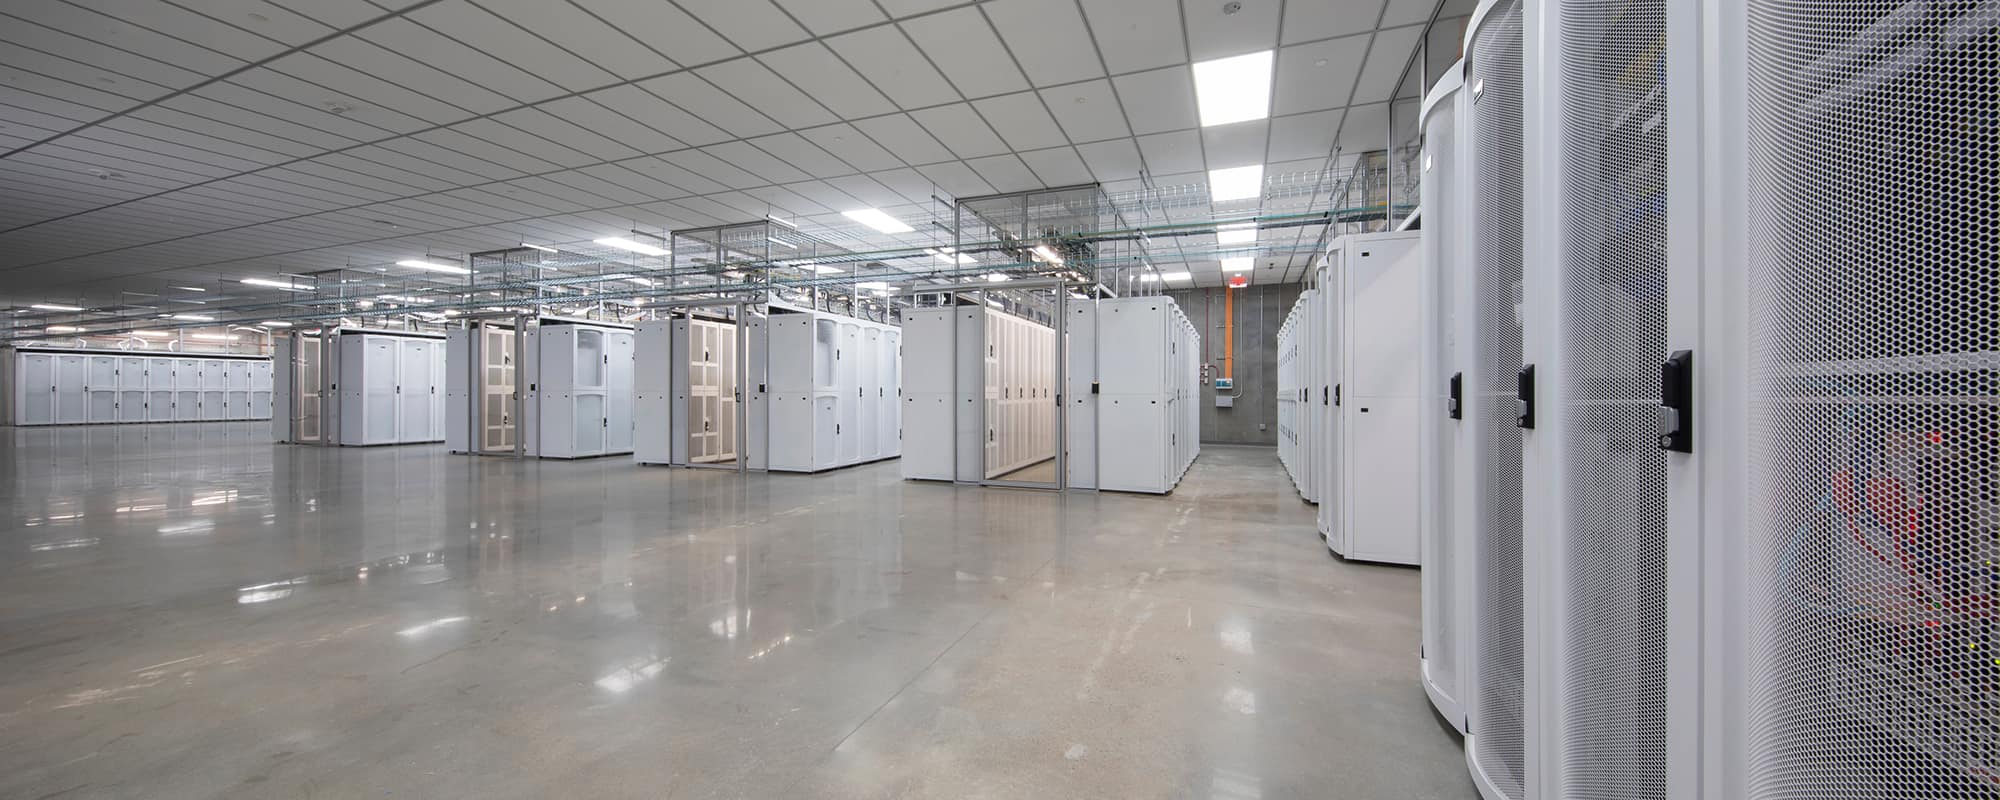 DC BLOX Birmingham data center server row